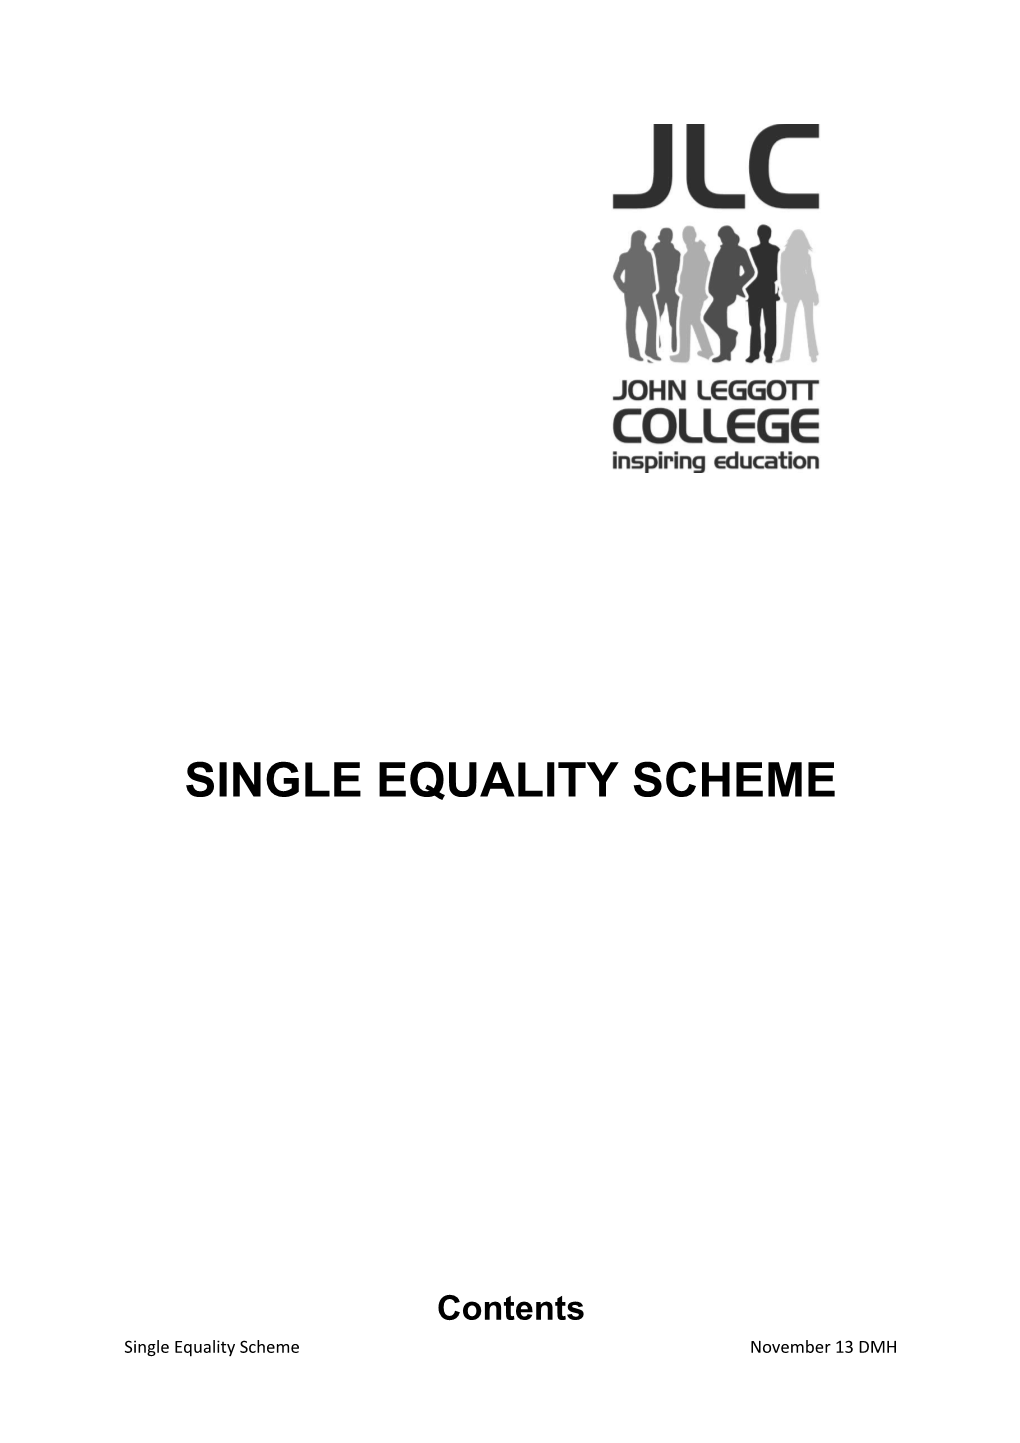 2. Equality & Diversity at John Leggott College3